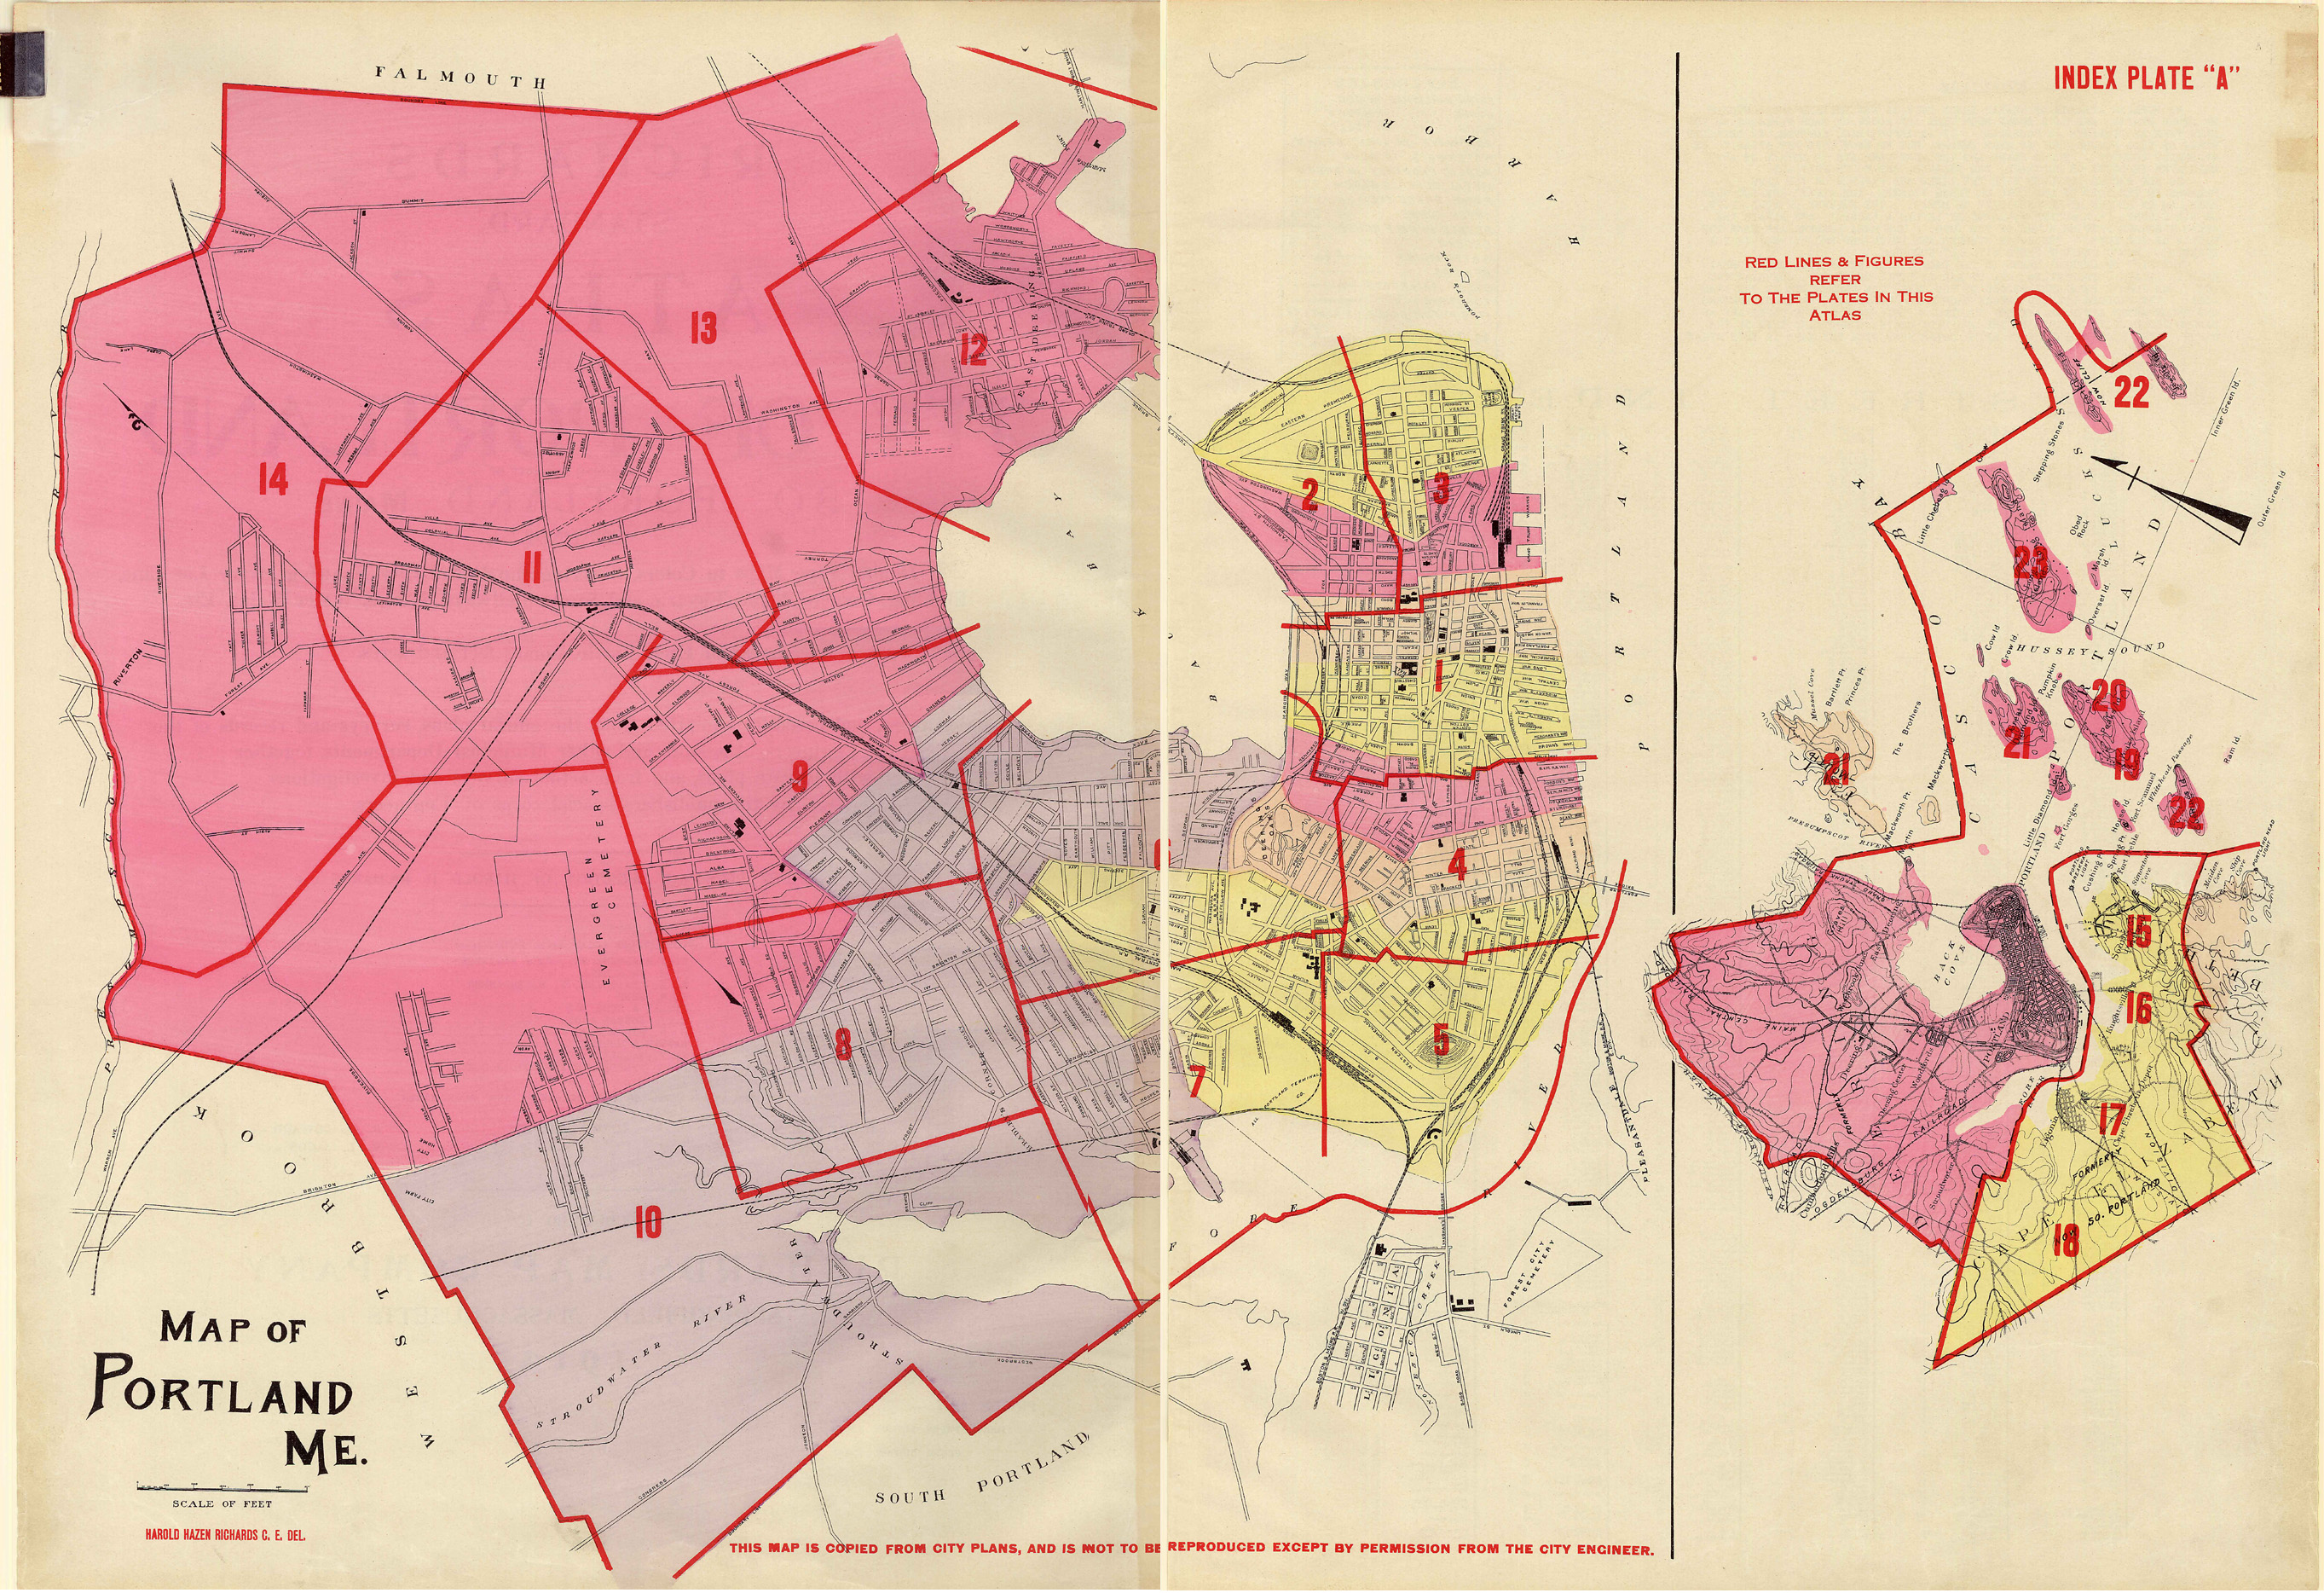 Richards Atlas of the City of Portland : 1914